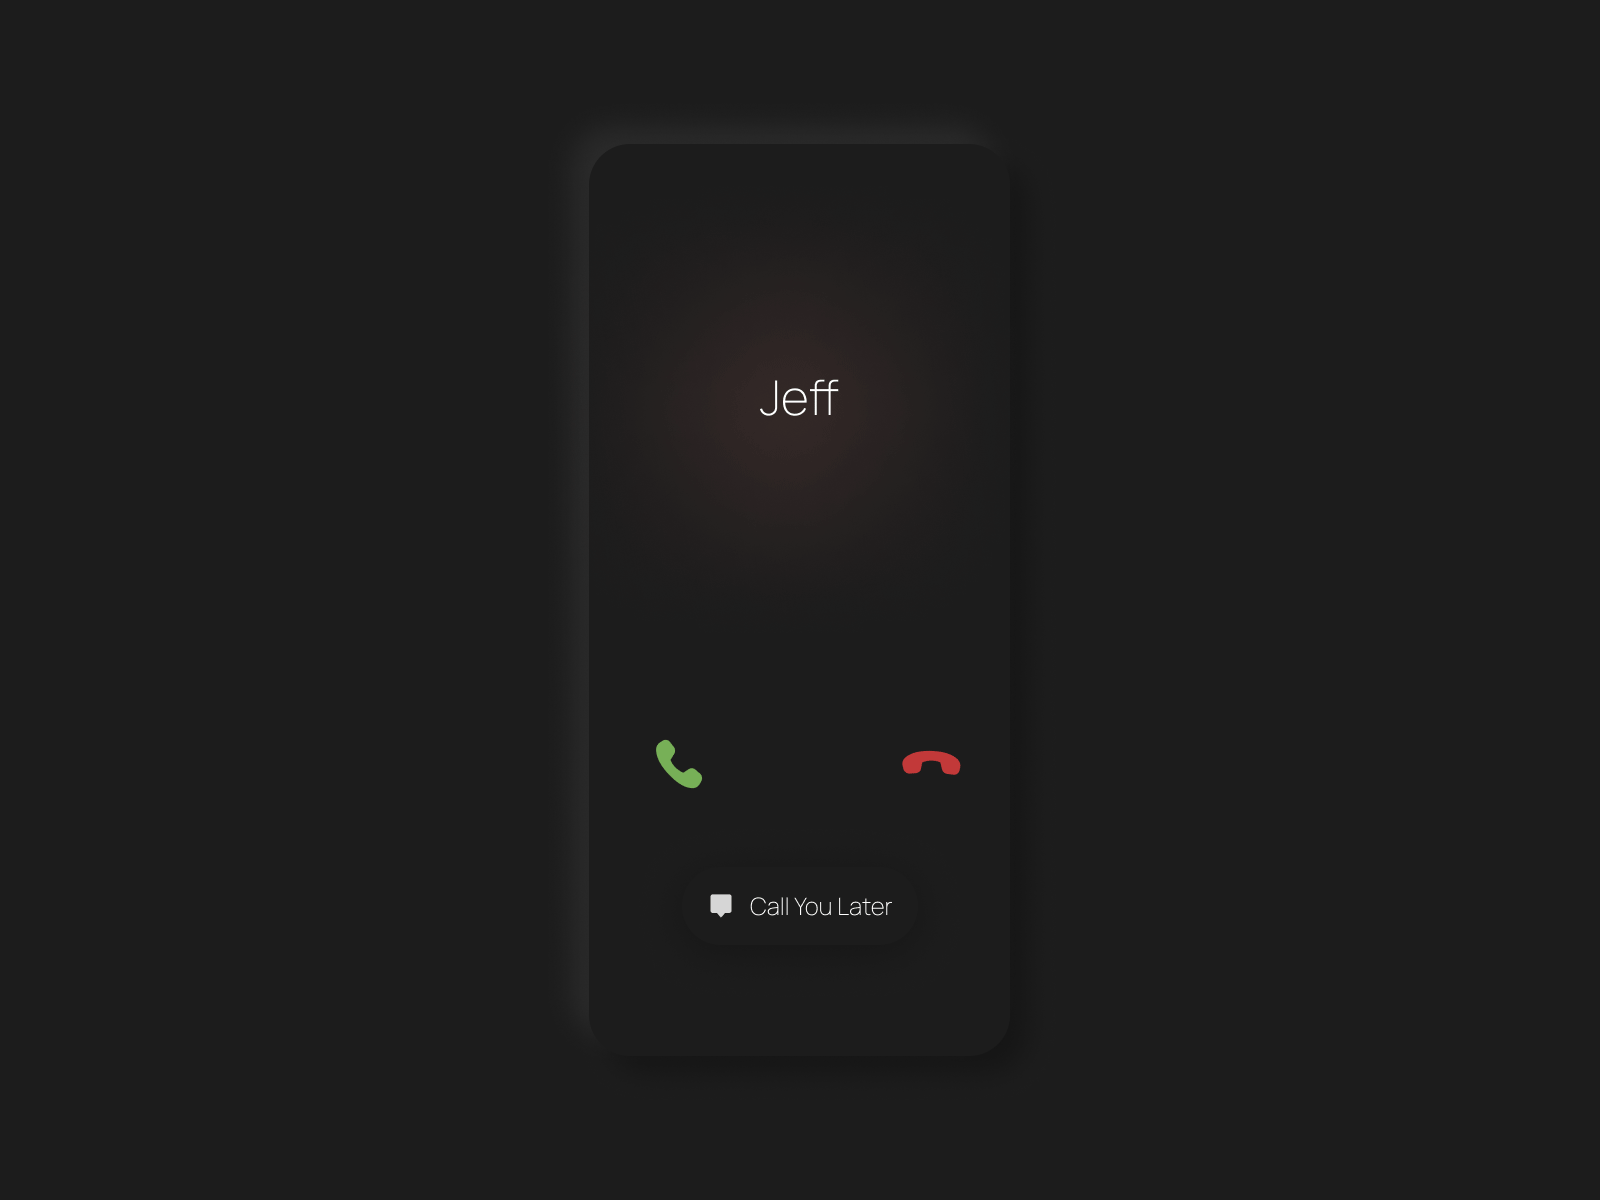 Jeff calling